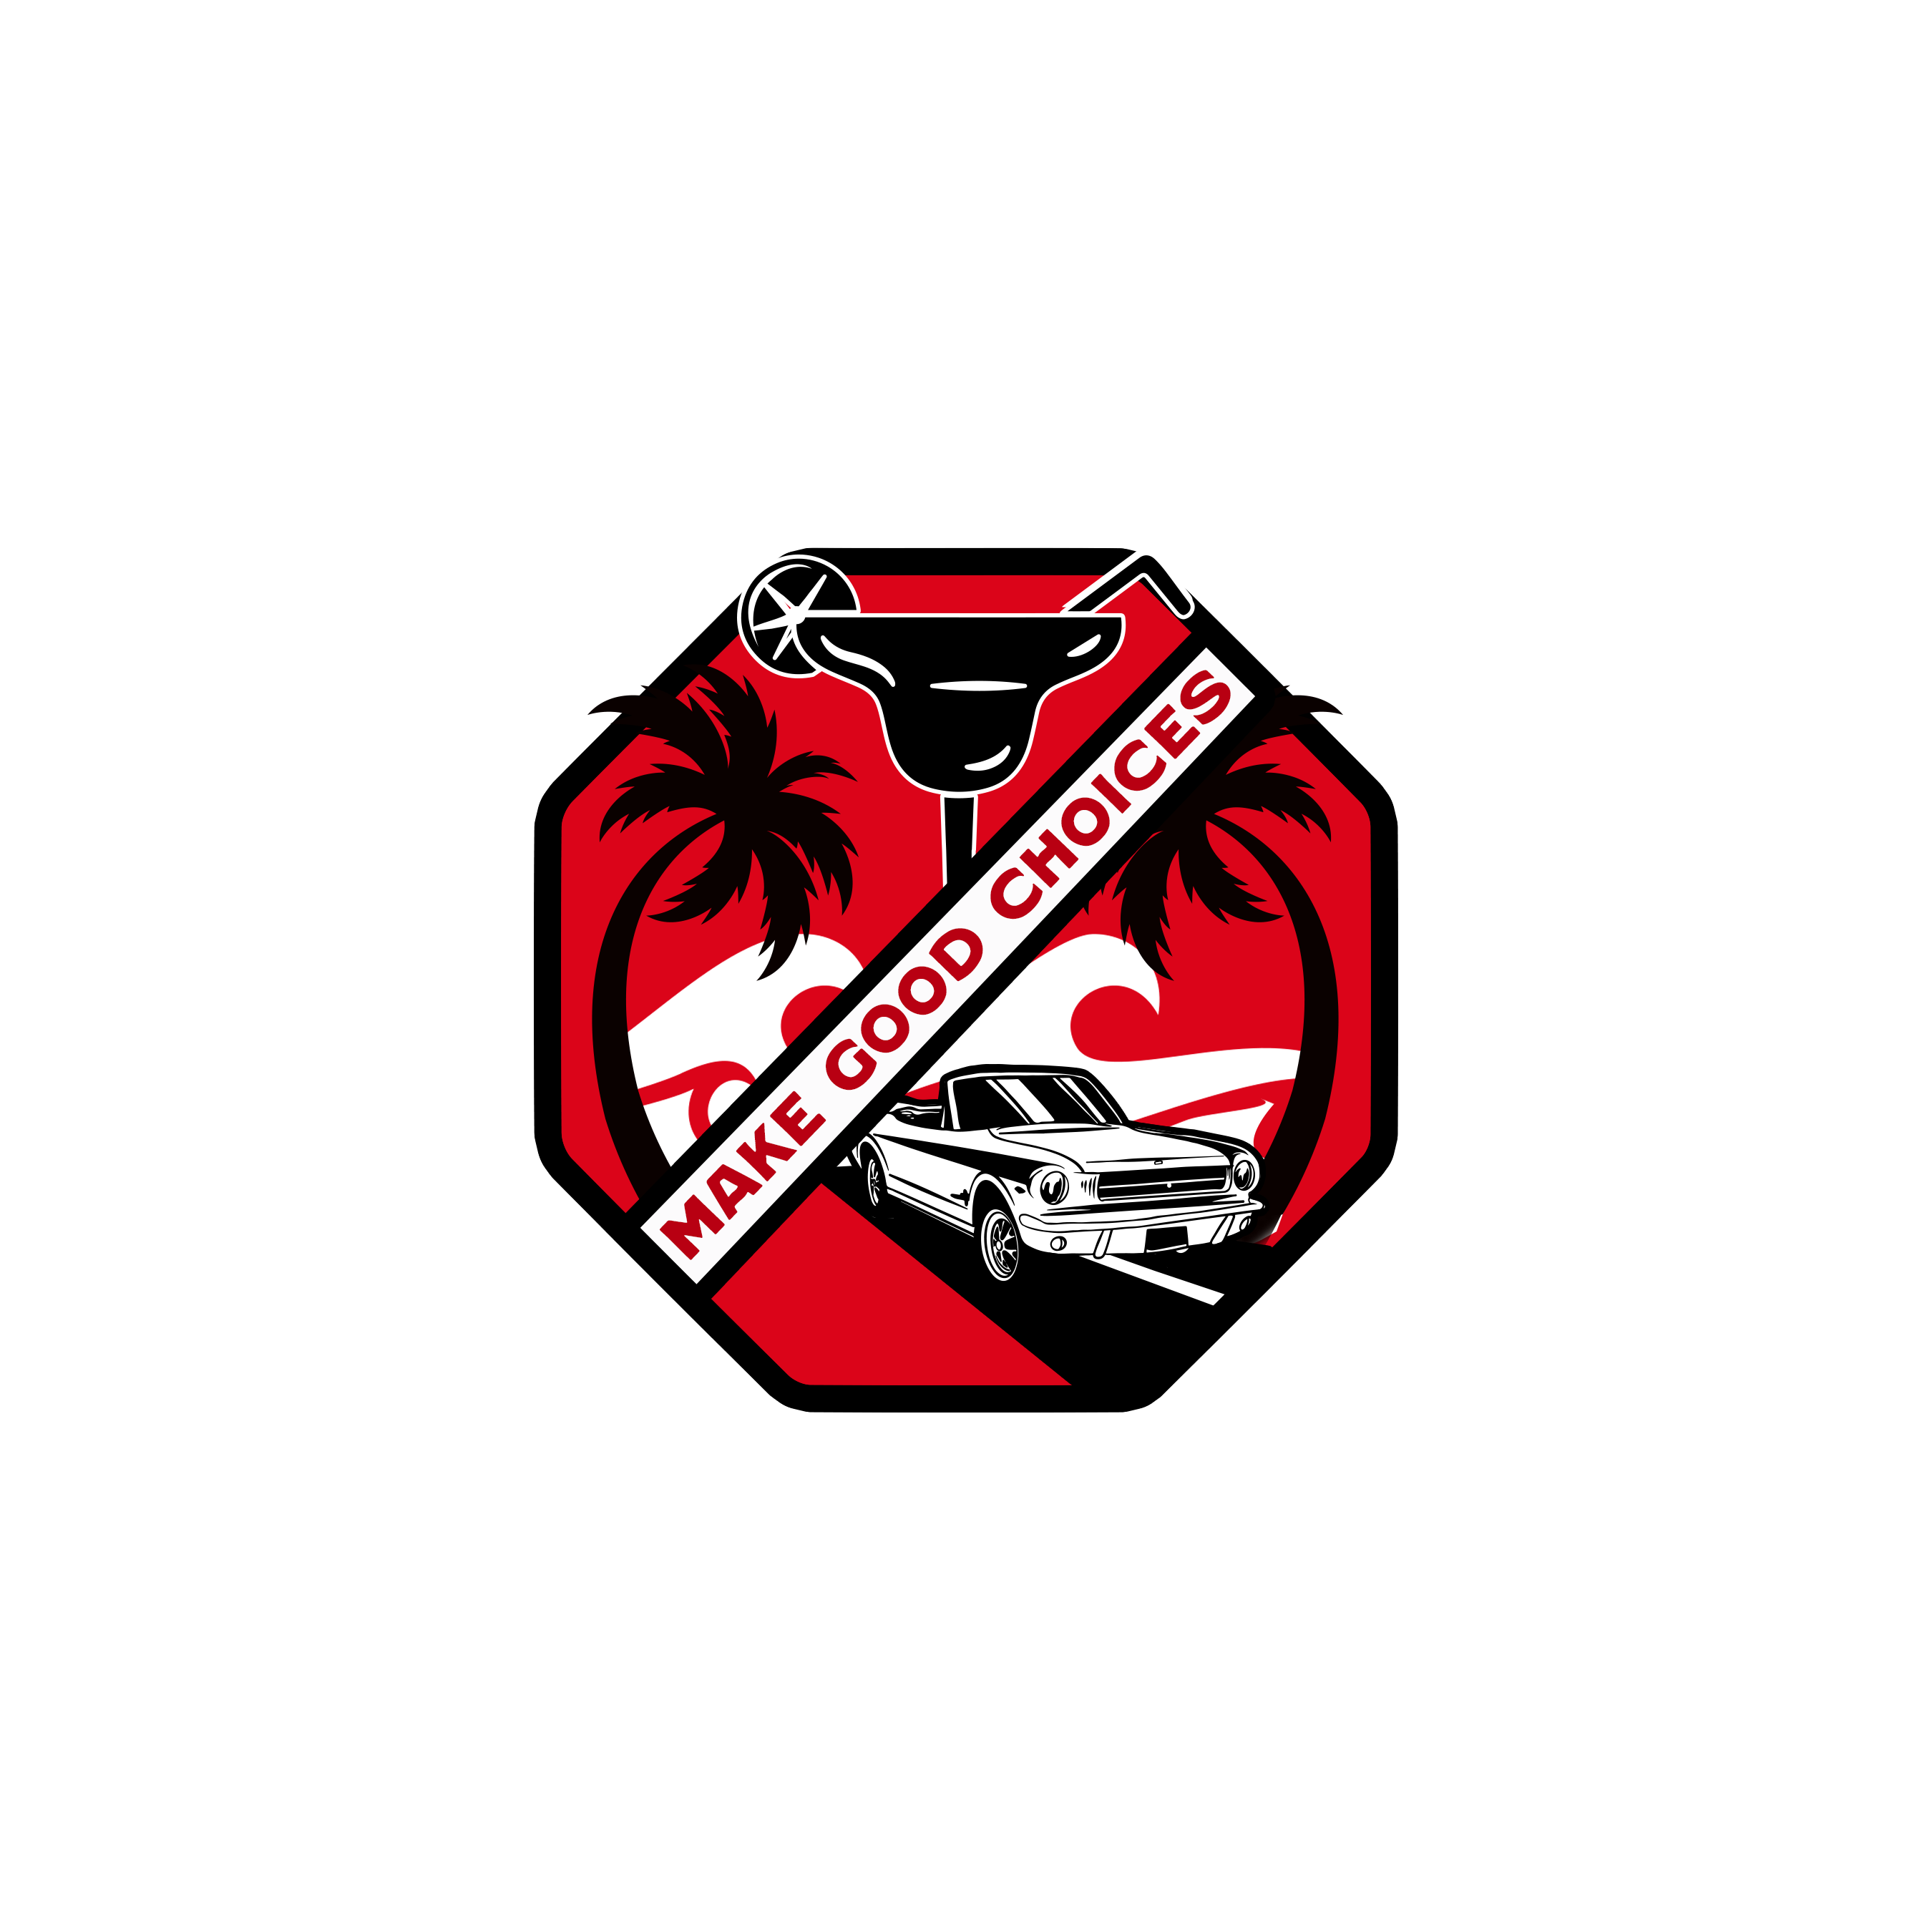 South Bay Safe Streets